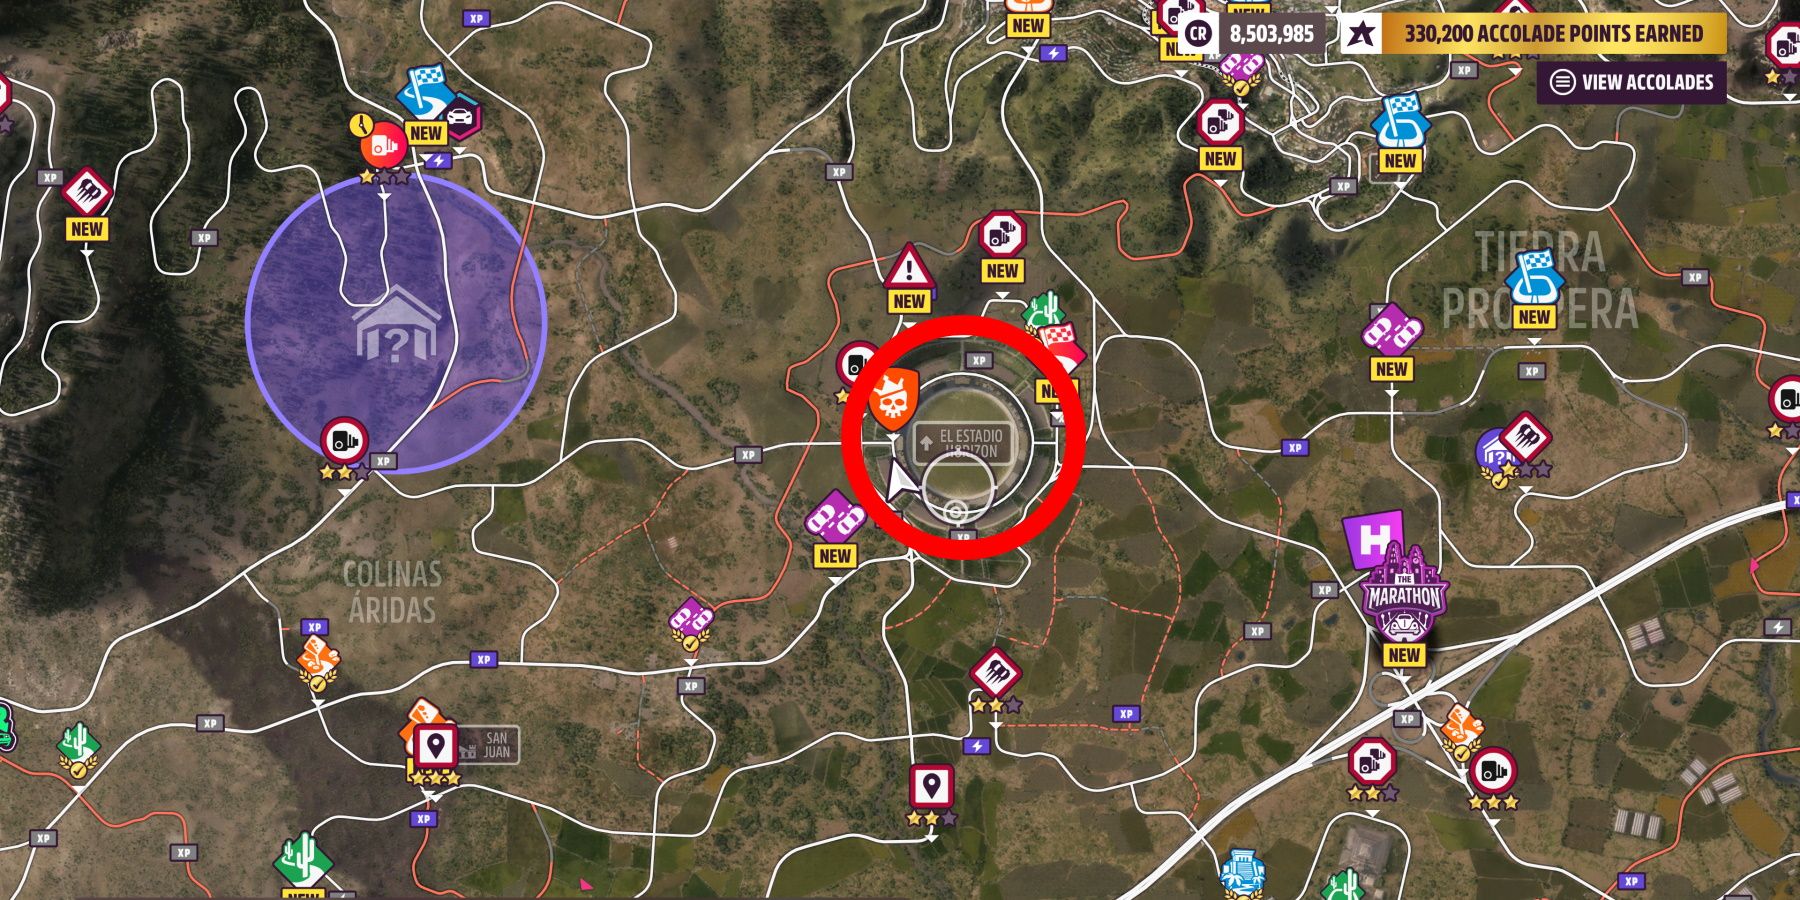 El Estadio Horizon location circled on Forza Horizon 5 map